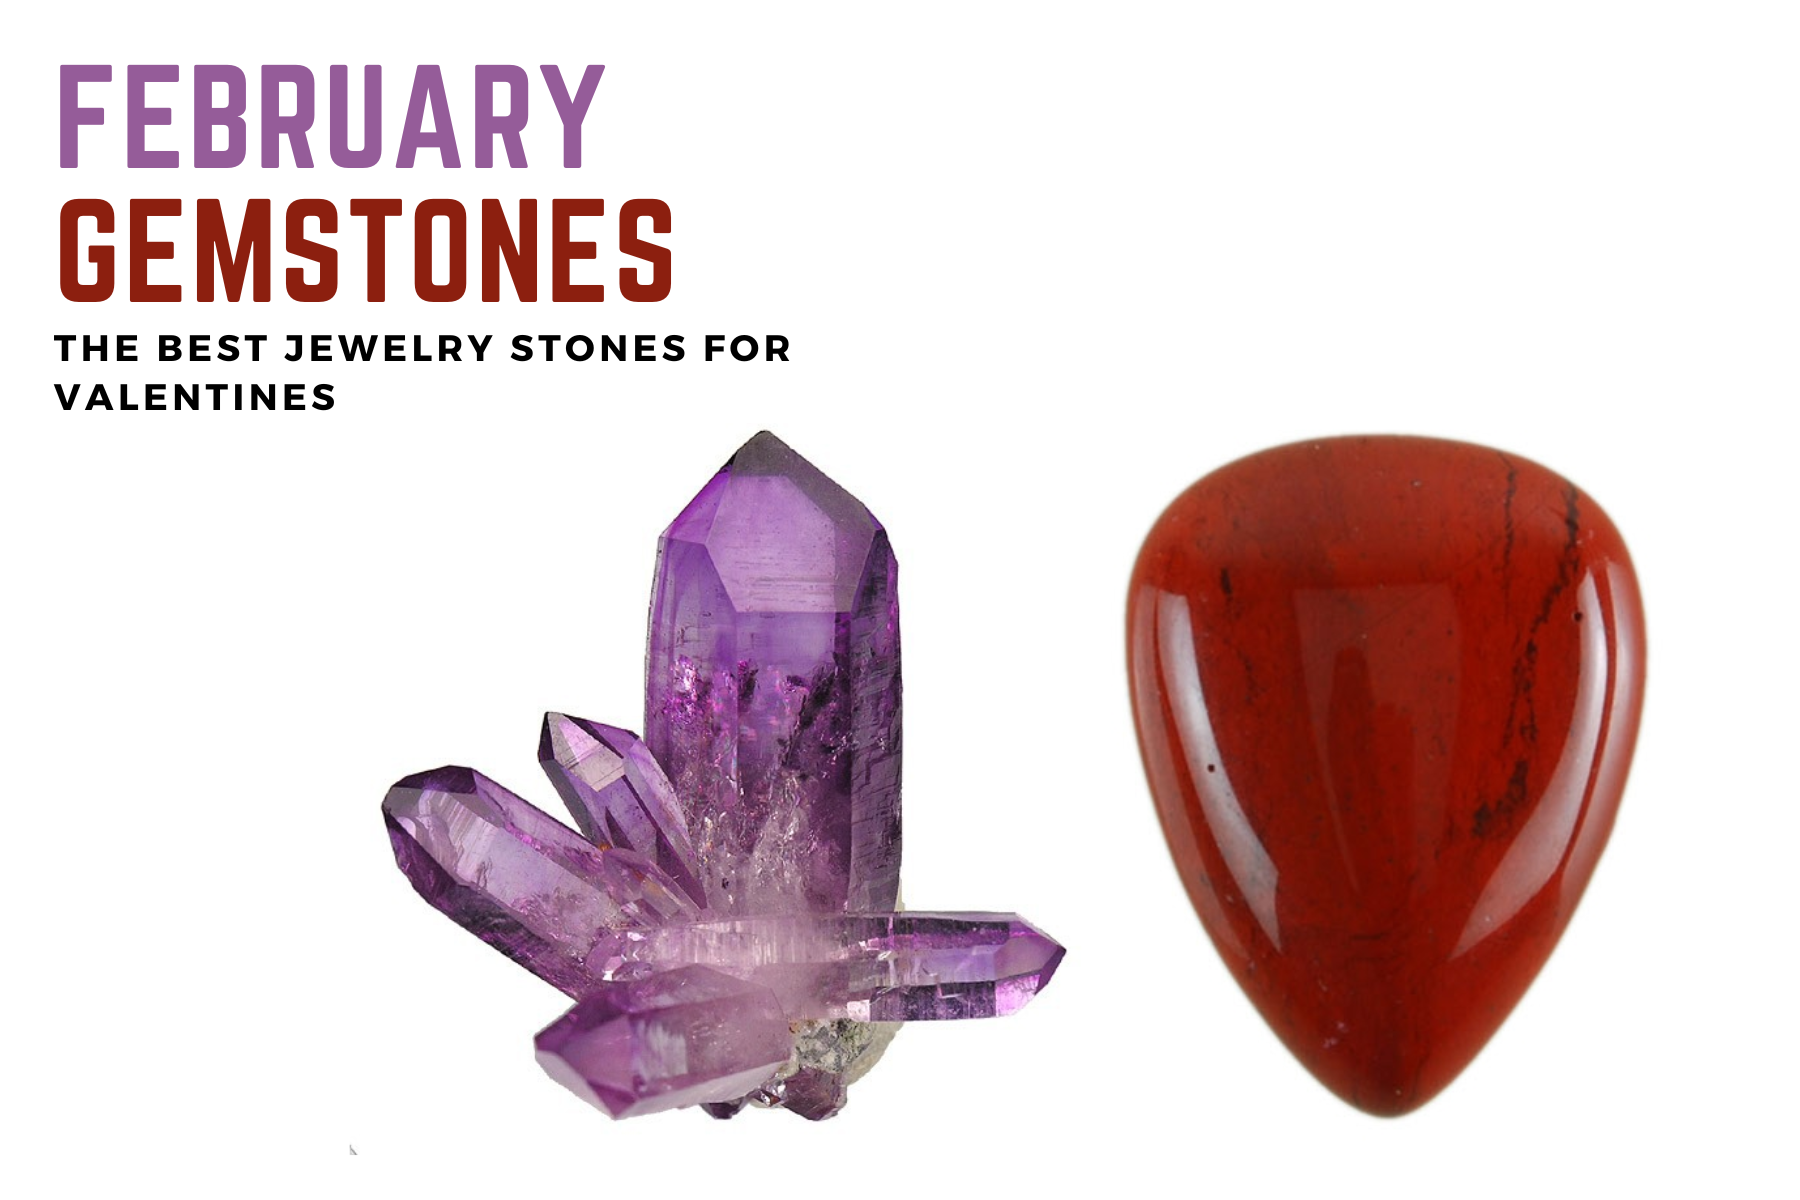 February Gemstones - The Best Jewelry Stones For Valentines